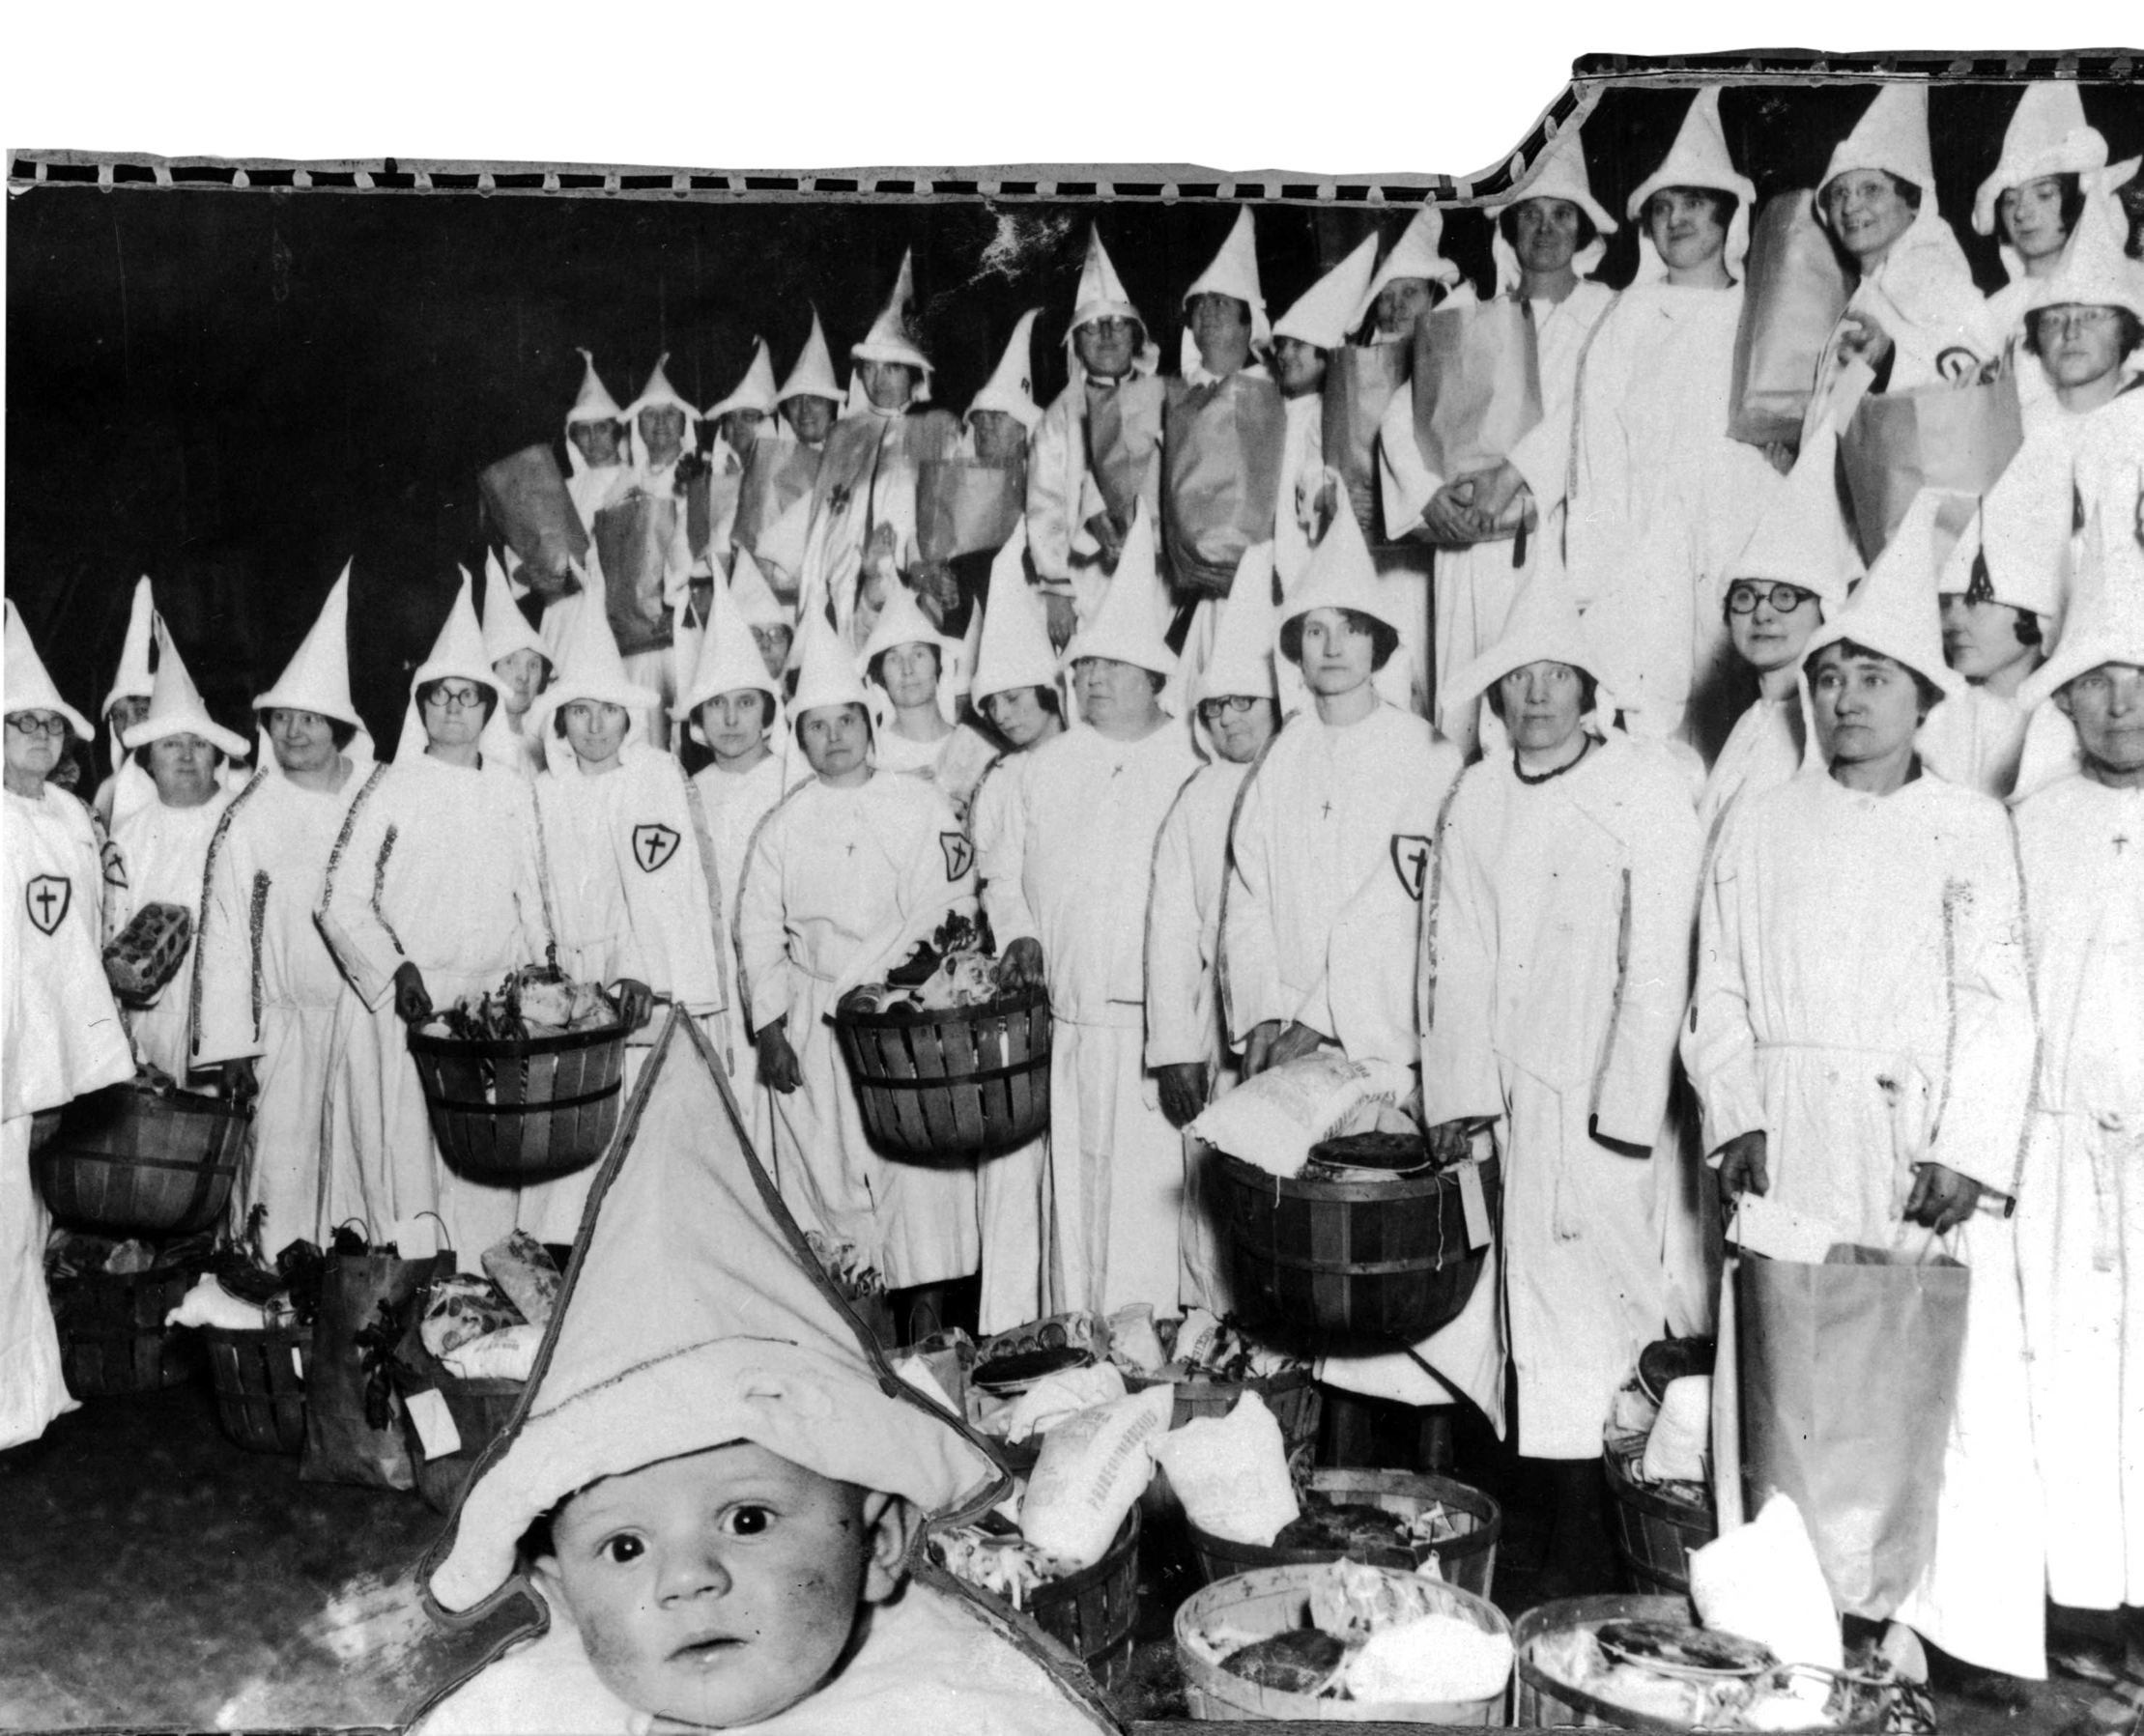 Original Ku Klux Klan Costume 1890's Costume, Found in house in